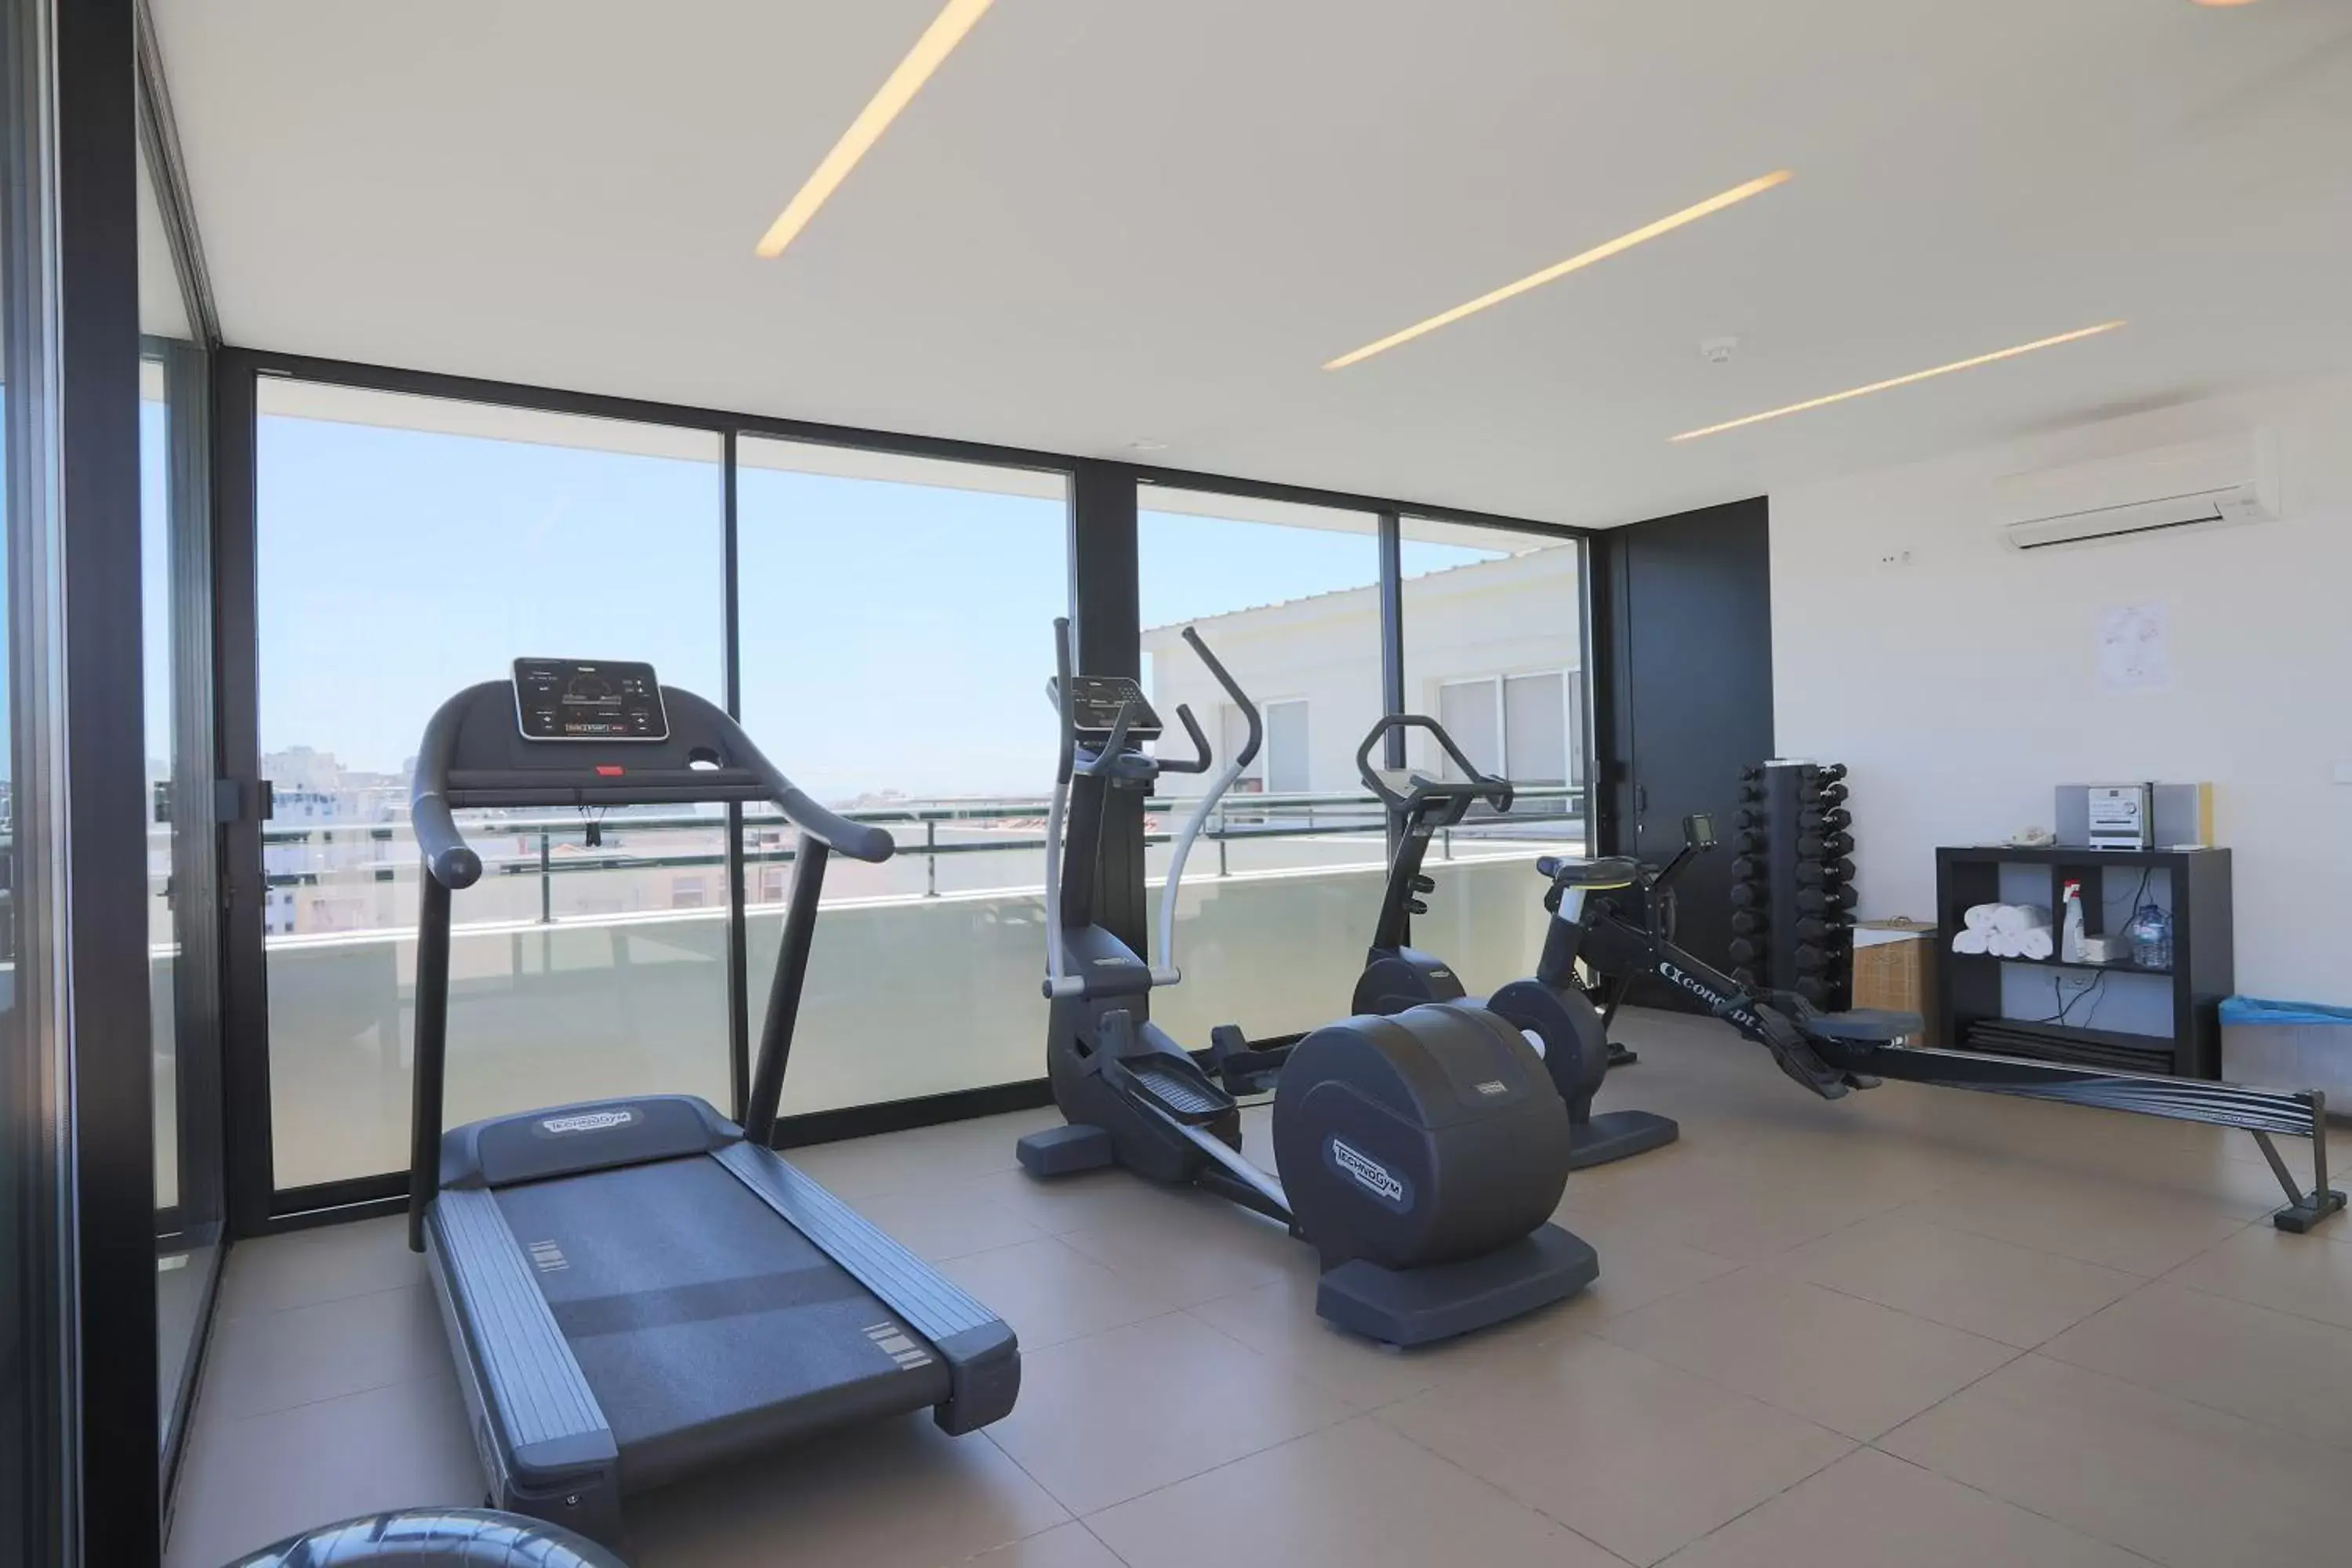 Fitness centre/facilities, Fitness Center/Facilities in Hotel Miraparque